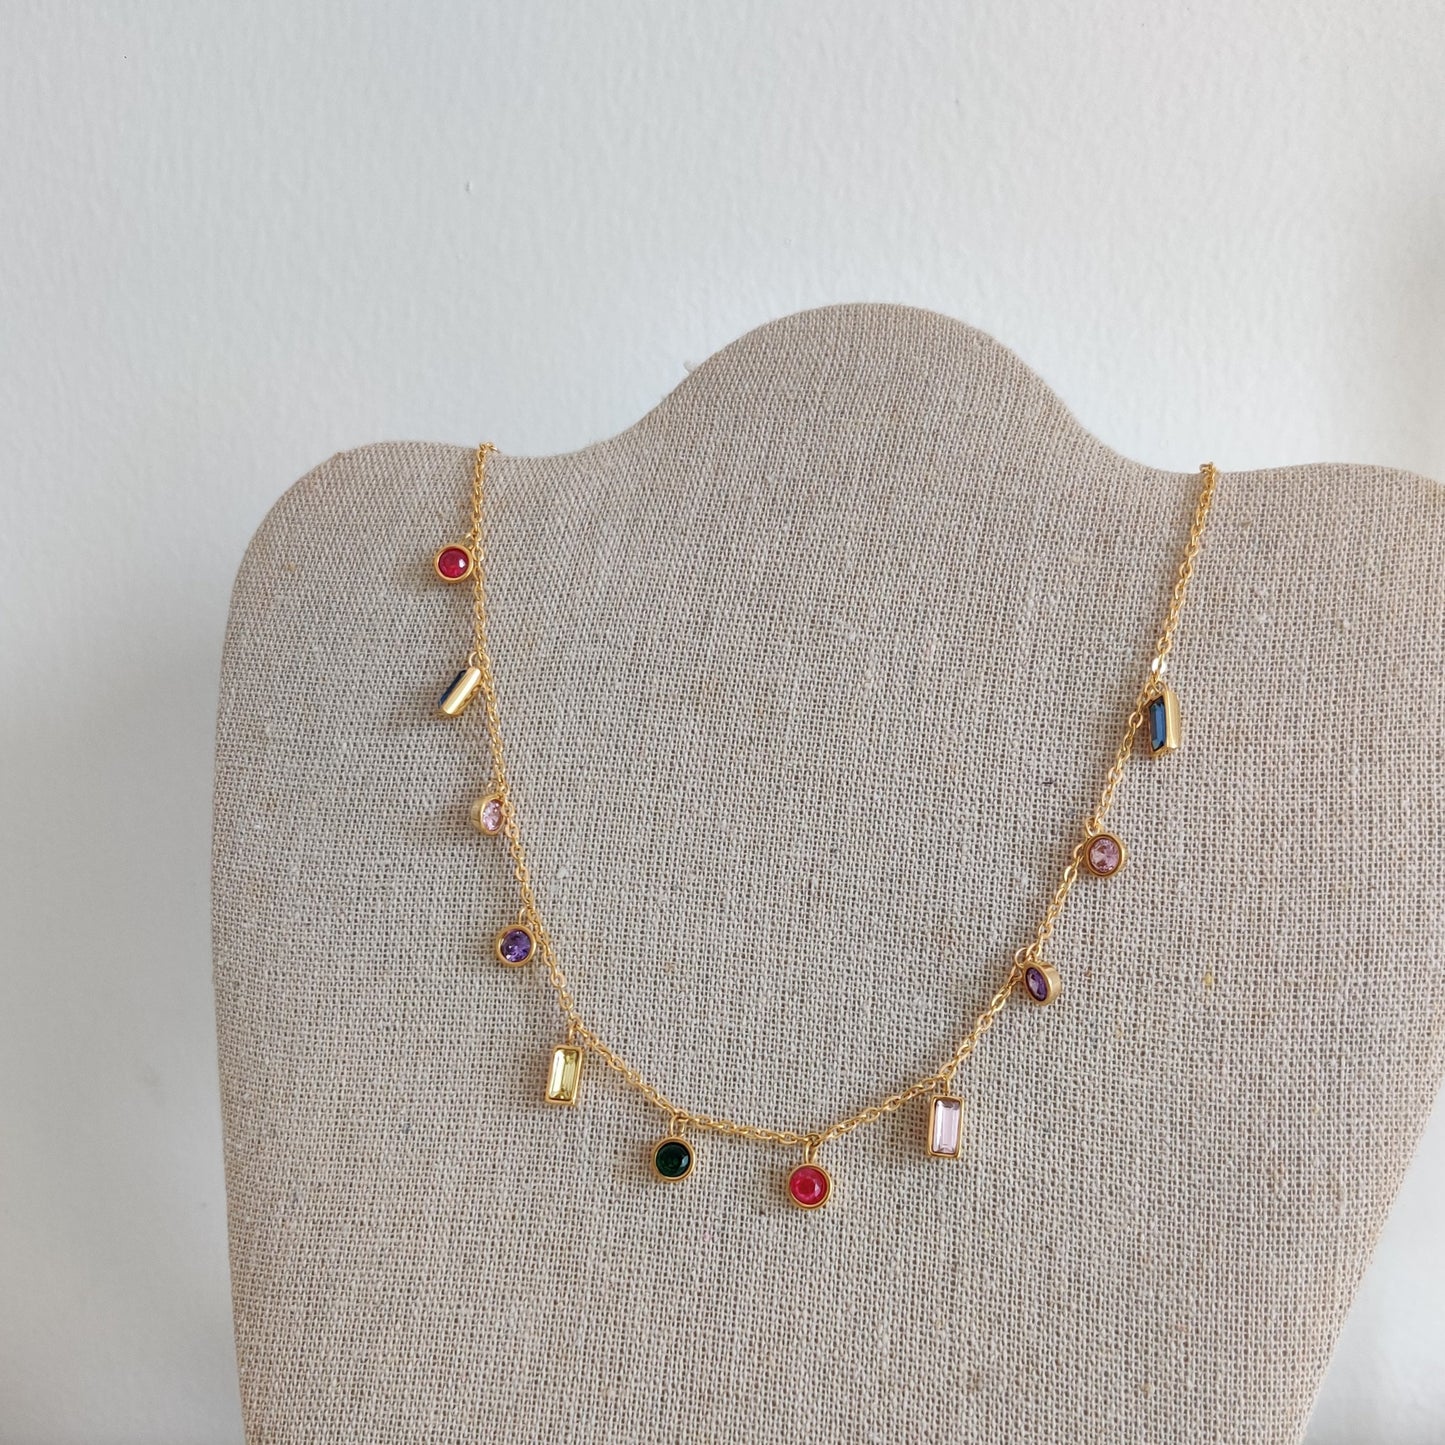 Bejeweled Multi-Stone Necklace